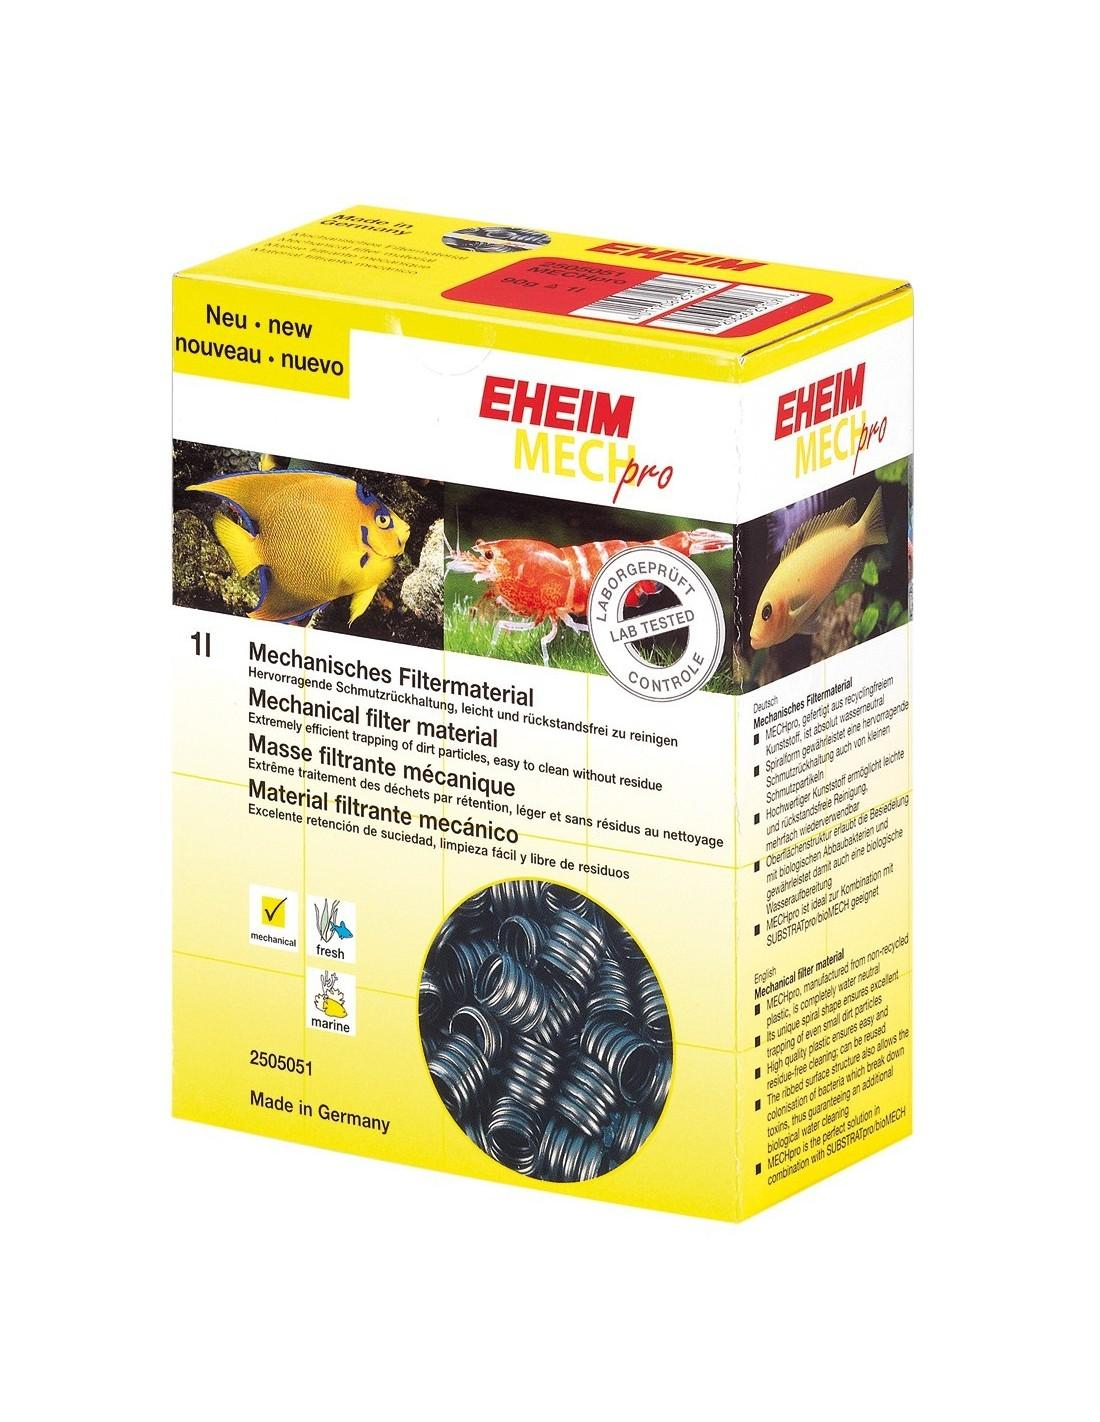 Material filtrante mecânico 90g EHEIM mech pro